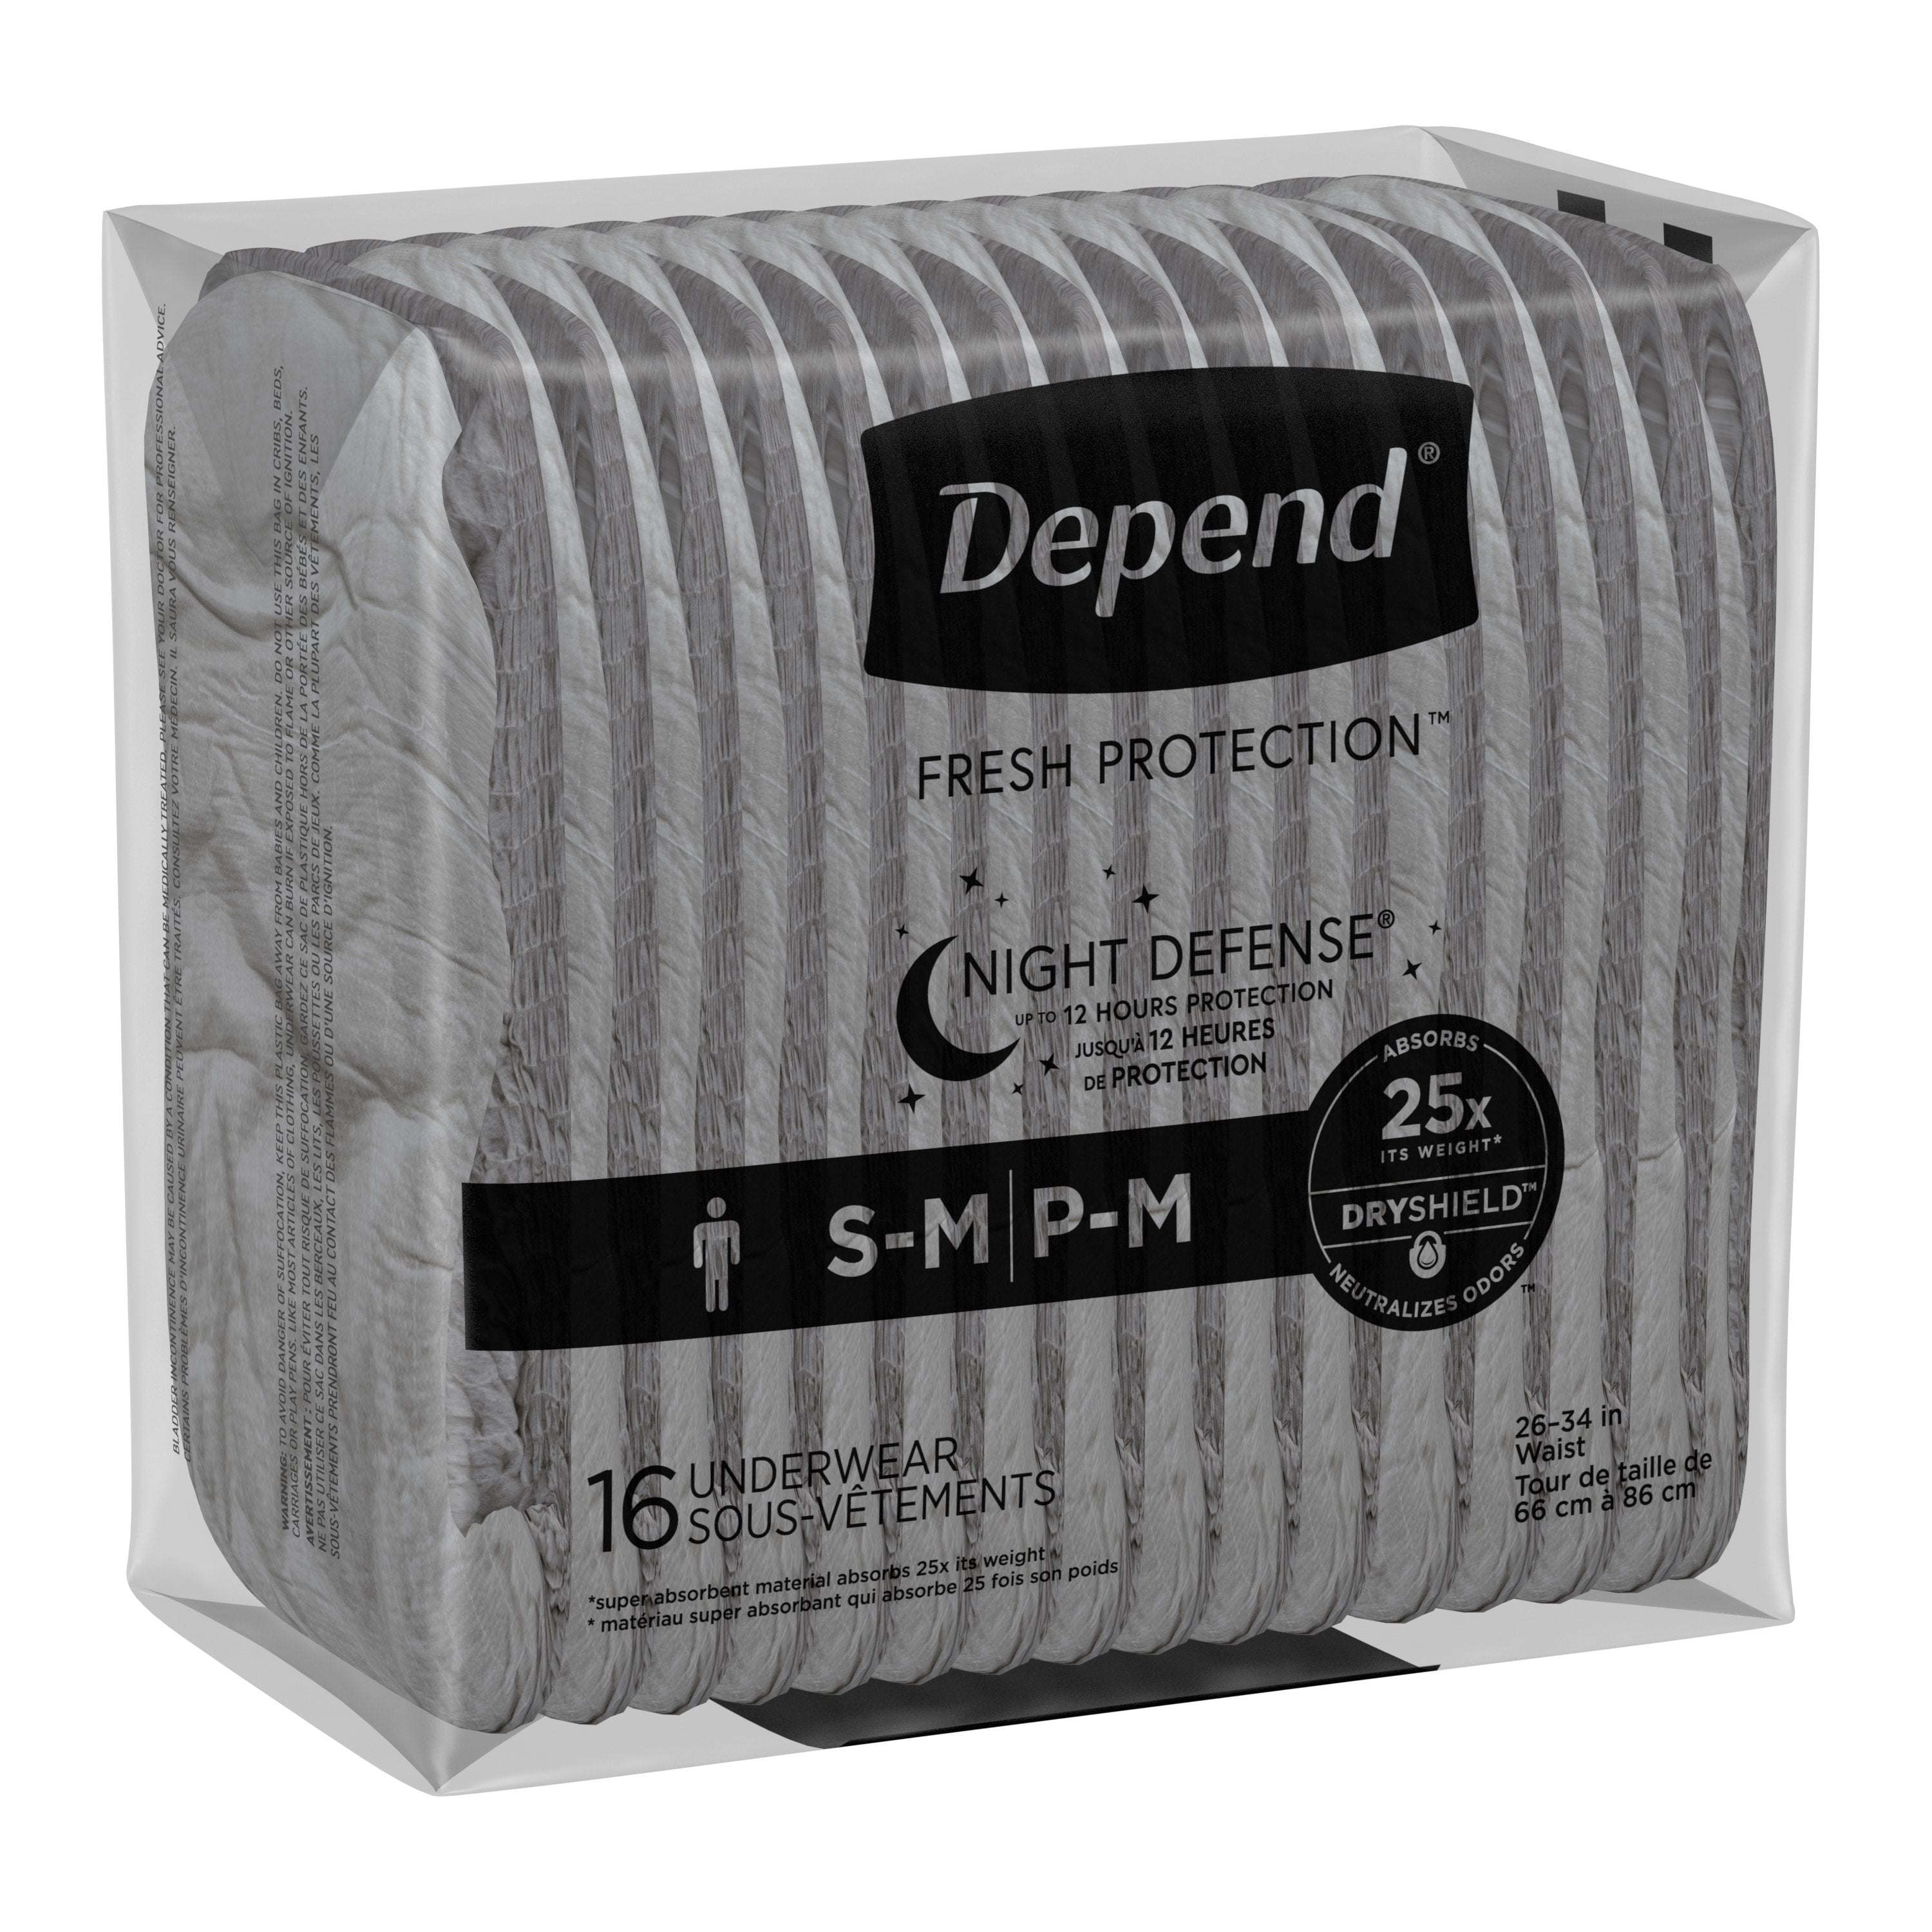 Depend Night Defense Underwear for Men - Value Pack